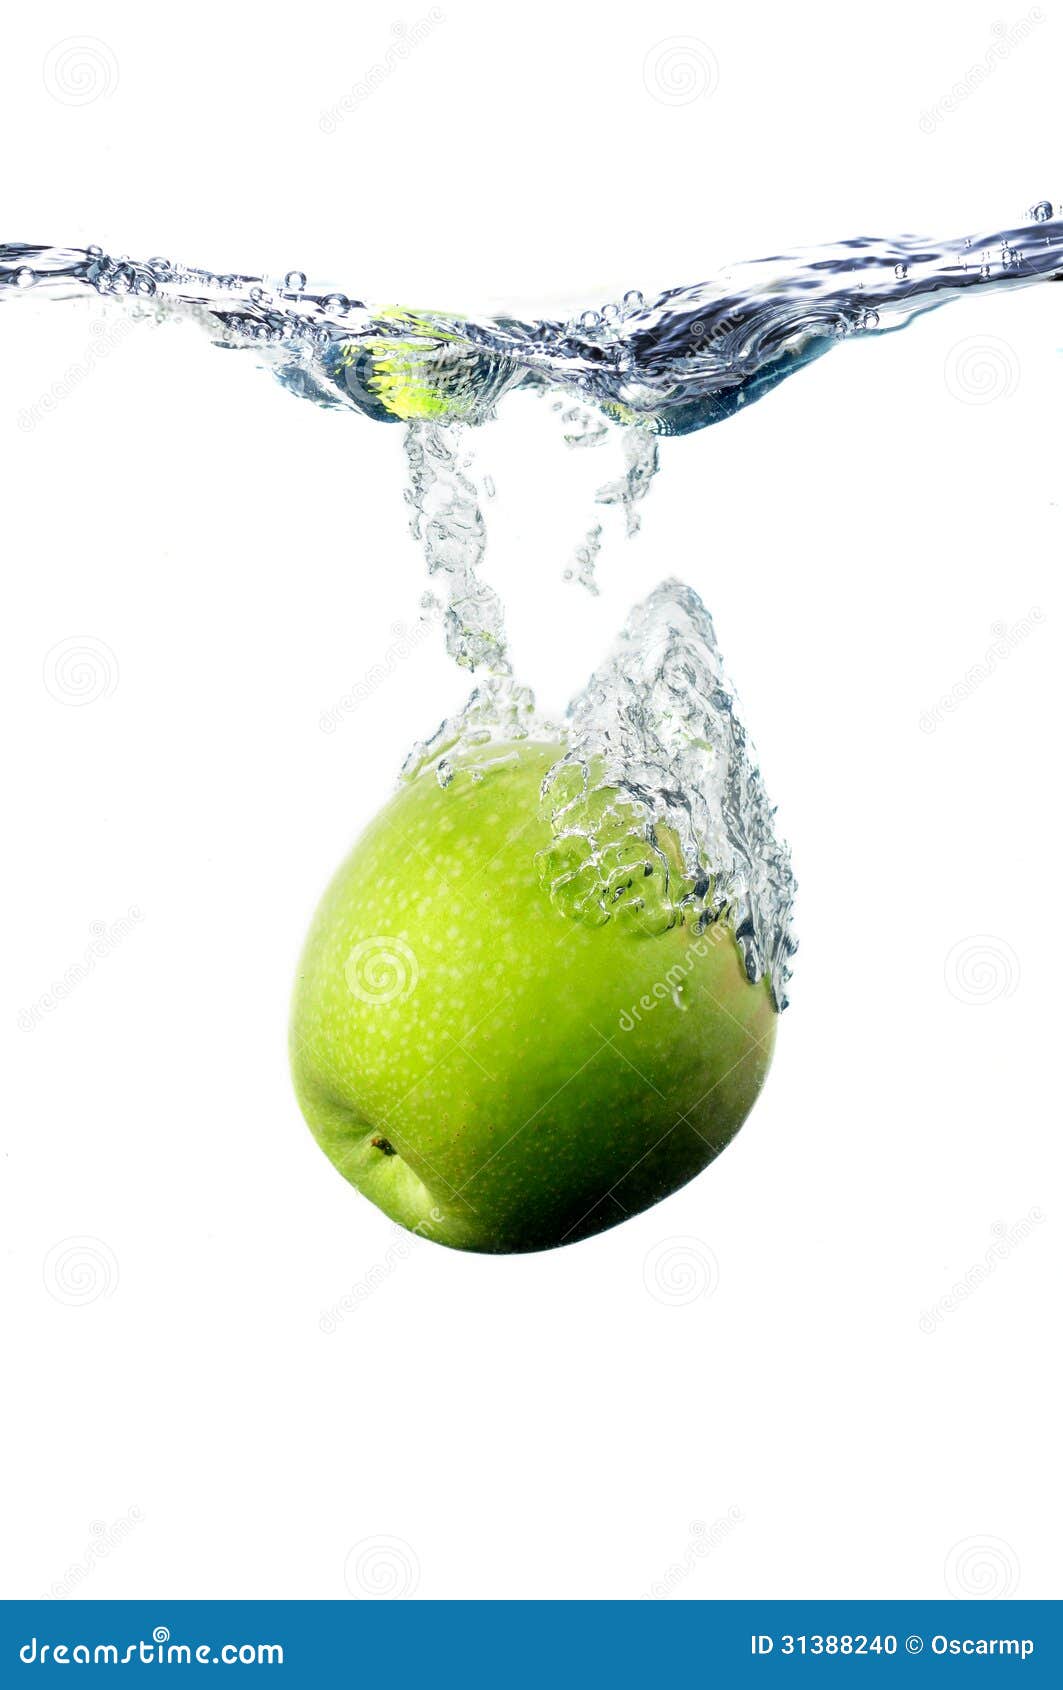 Apple stock photo. Image of healthy, fruit, bubbles, splashing - 31388240